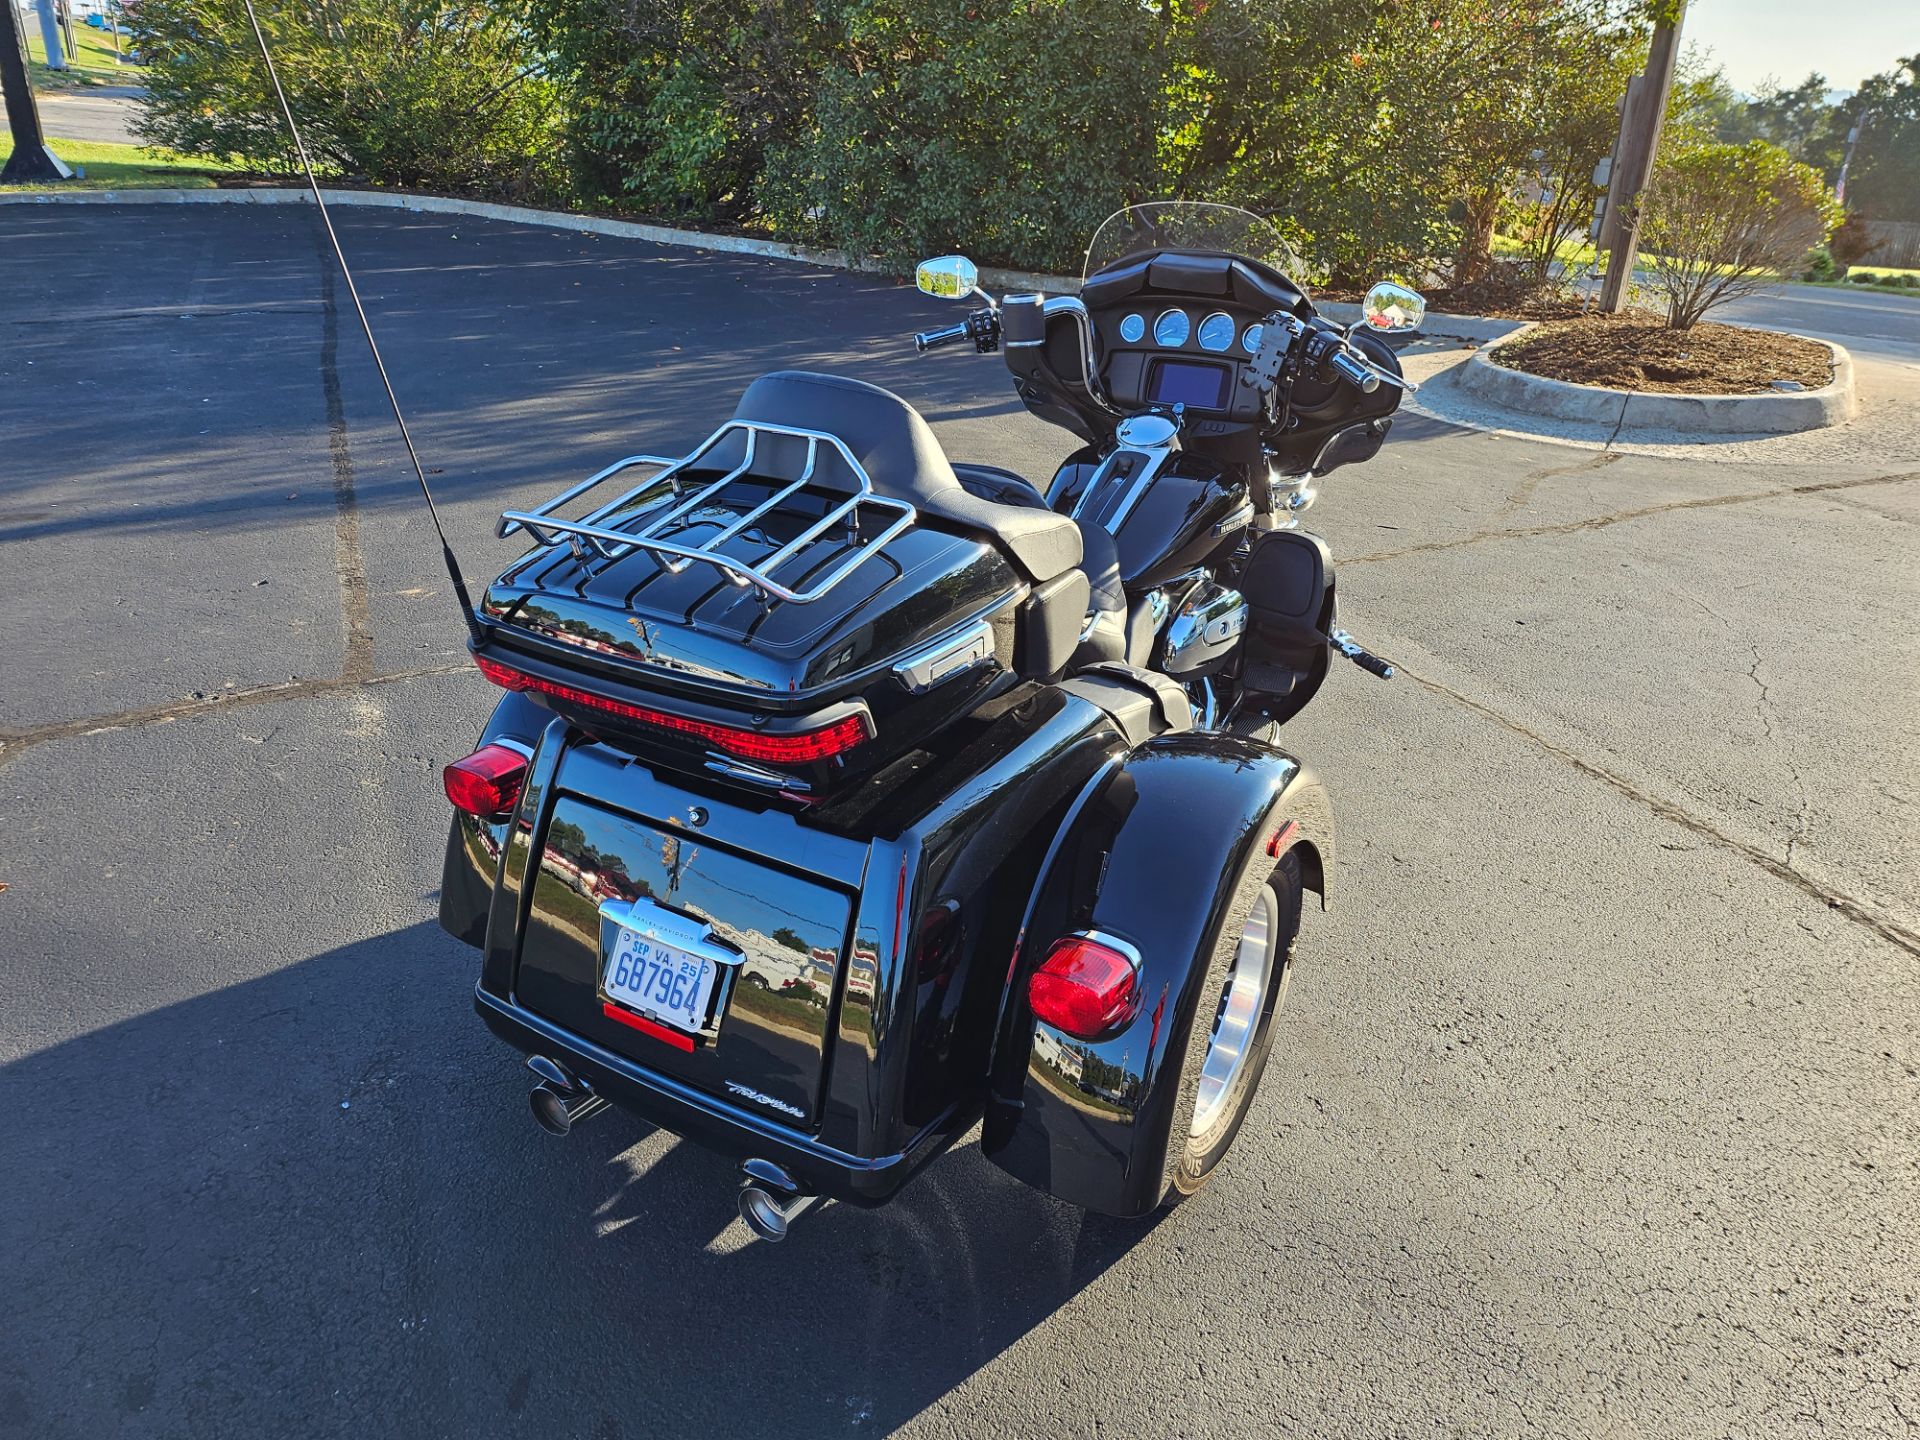 2021 Harley-Davidson Tri Glide® Ultra in Lynchburg, Virginia - Photo 7